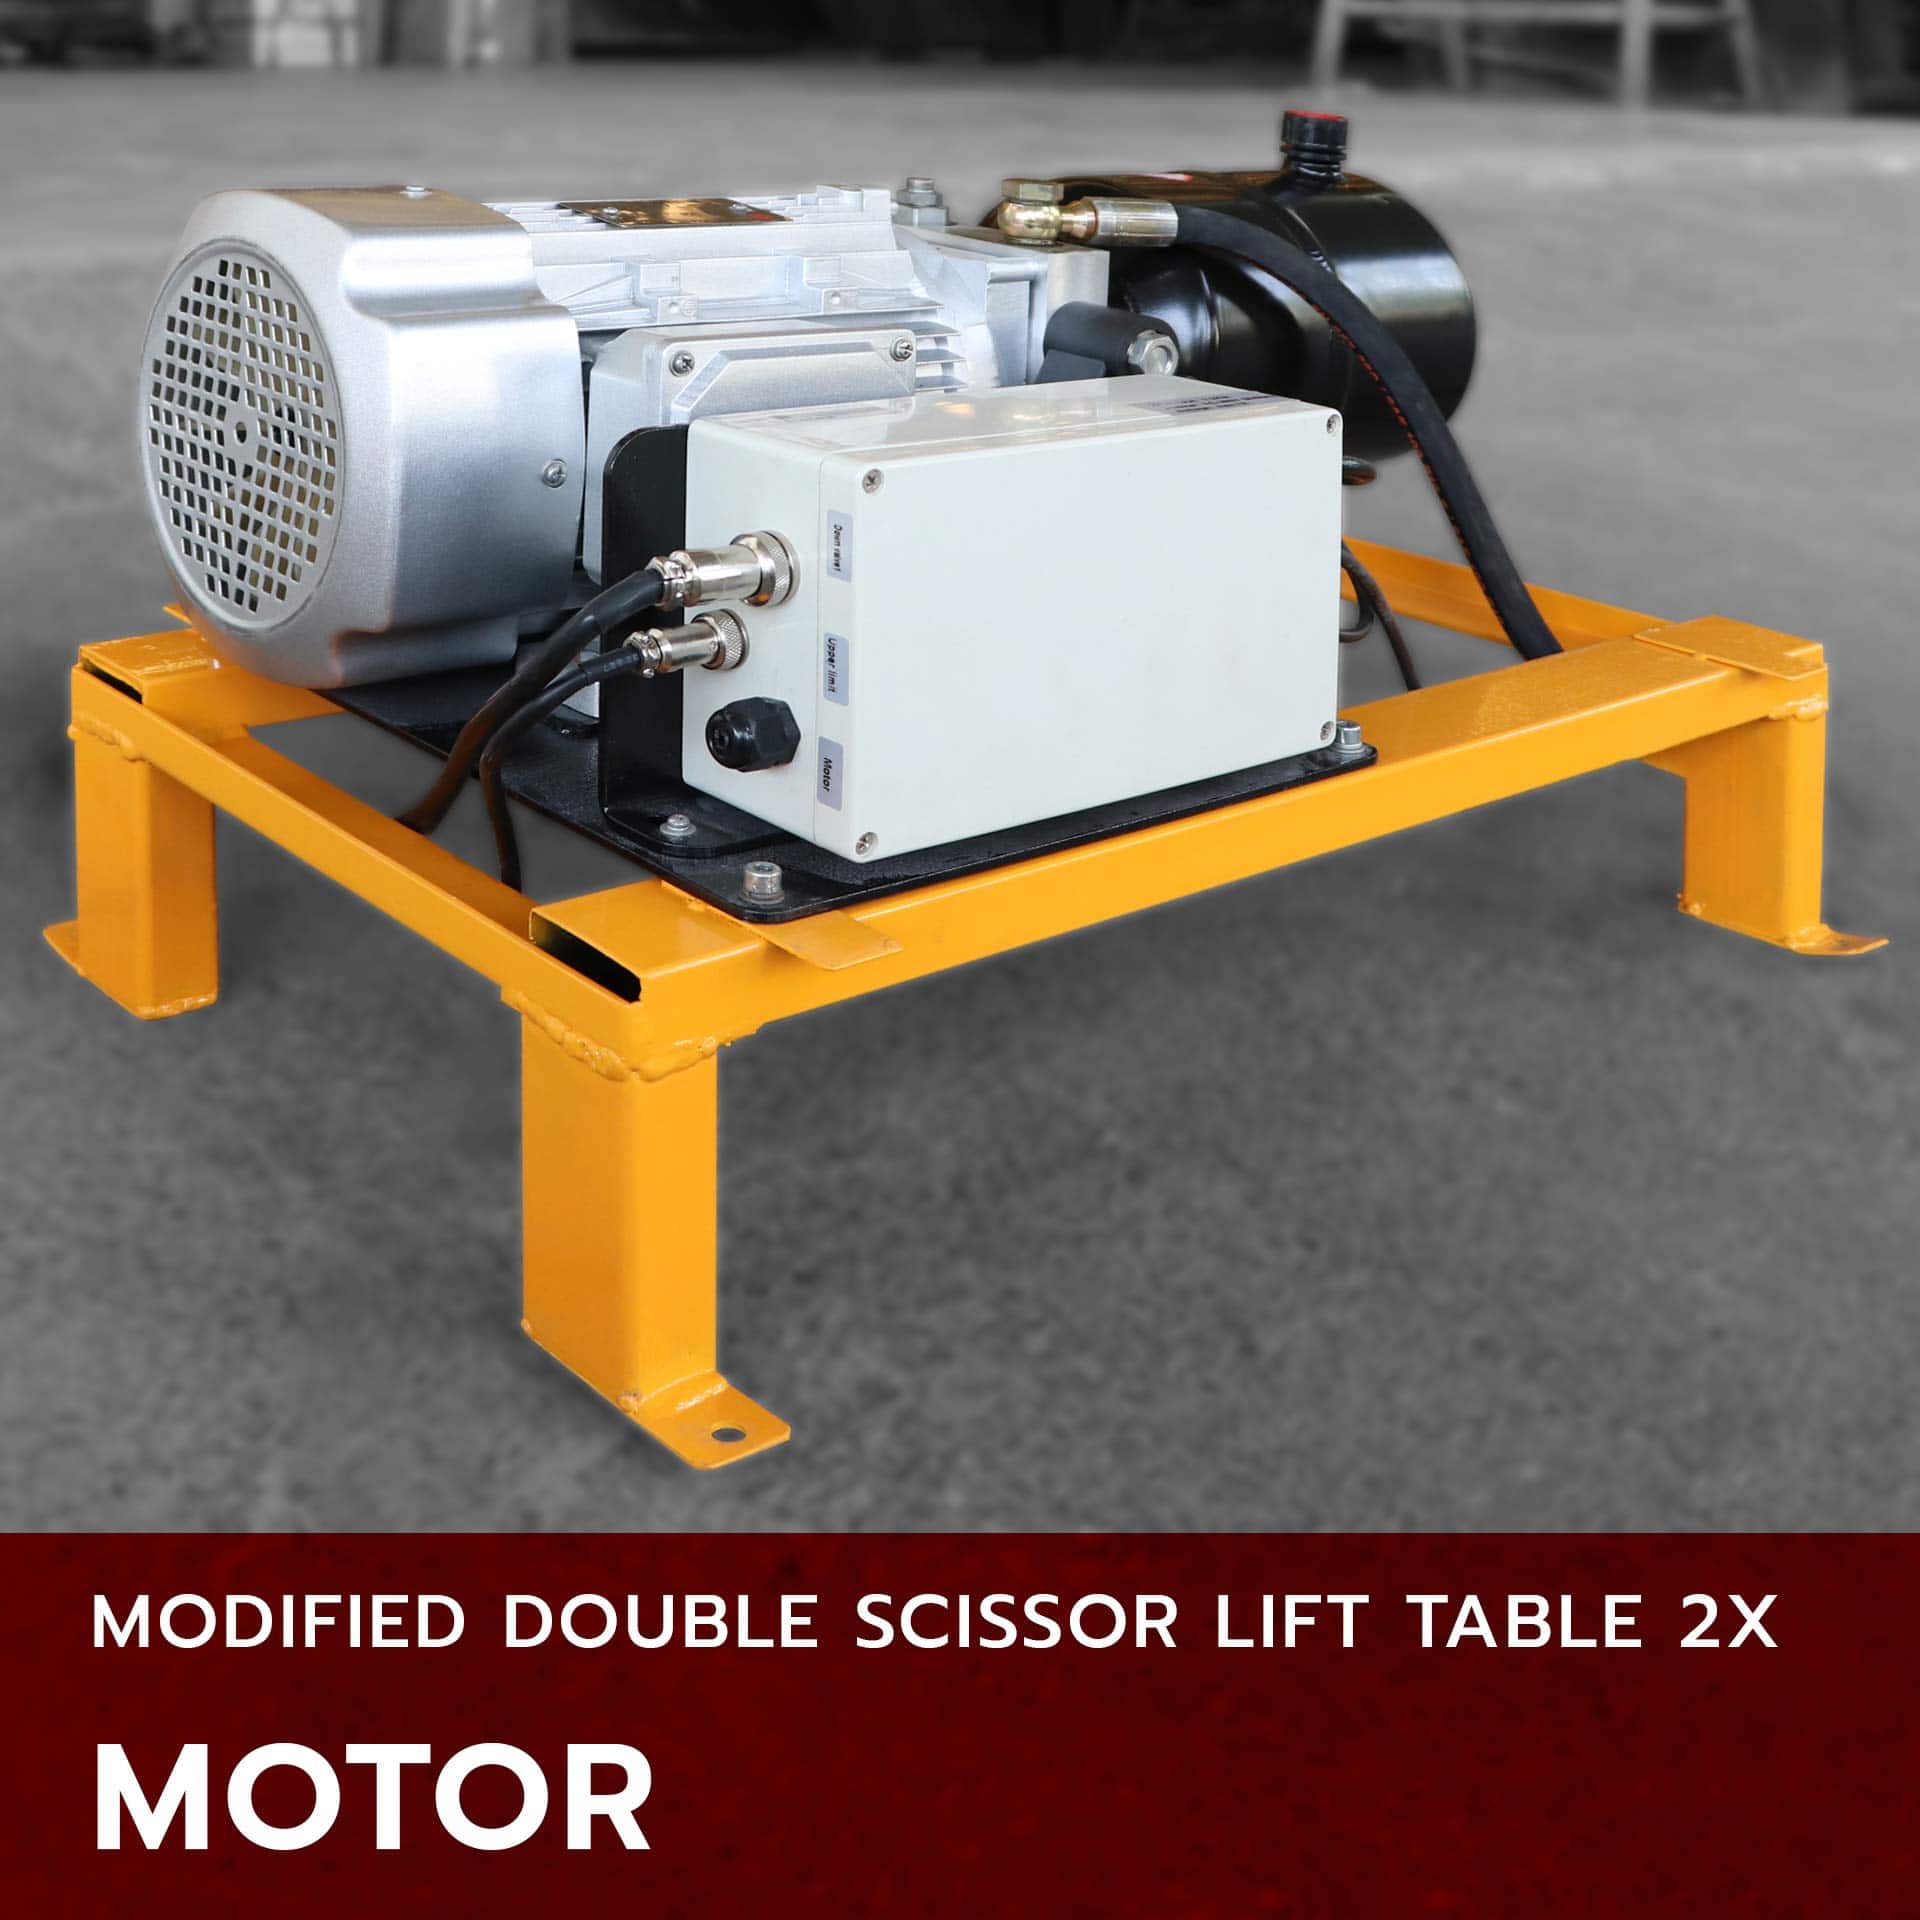 2. Modified double scissor lift table 2x motor 1